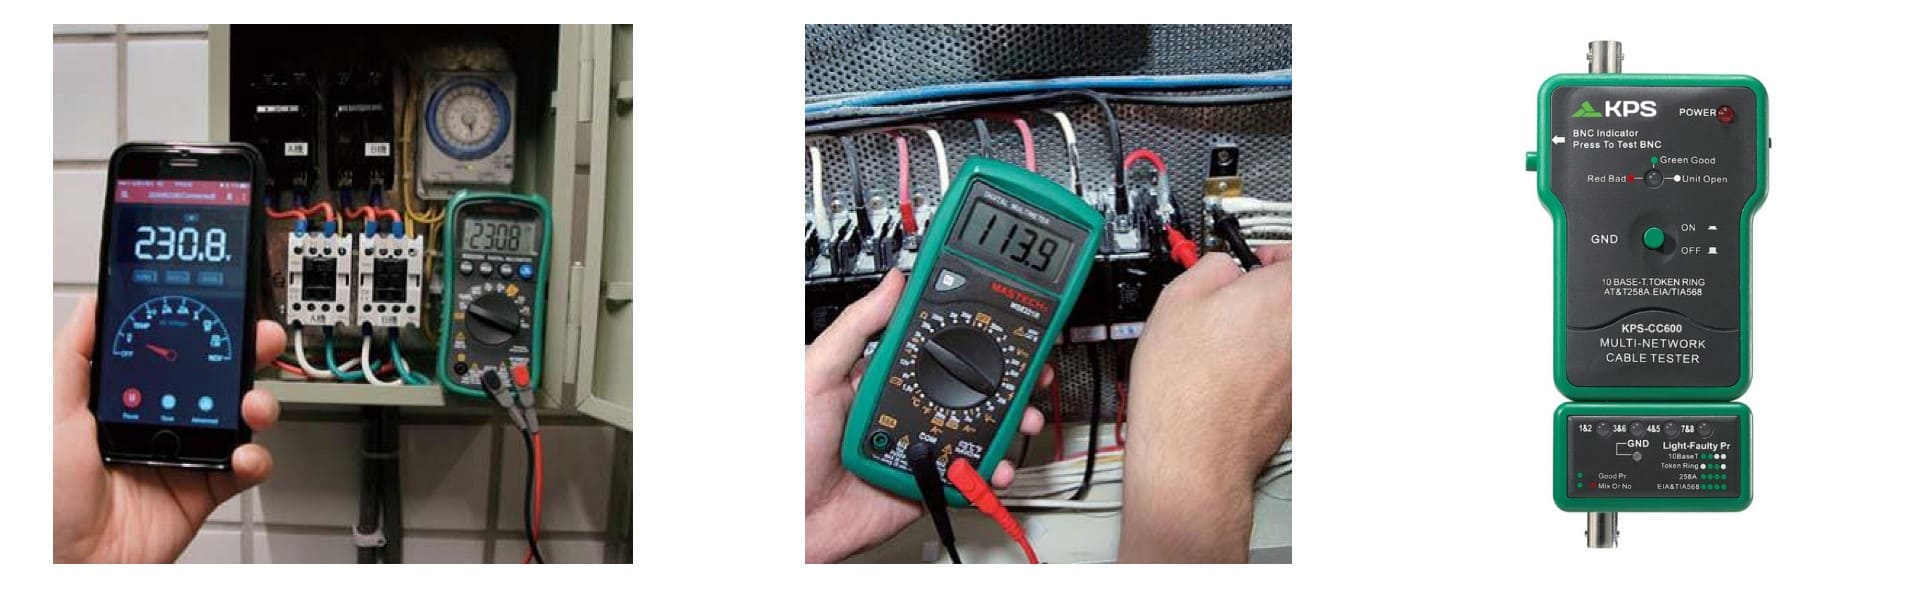 Comprobador de Cables de Red RJ45 - Impo Audio